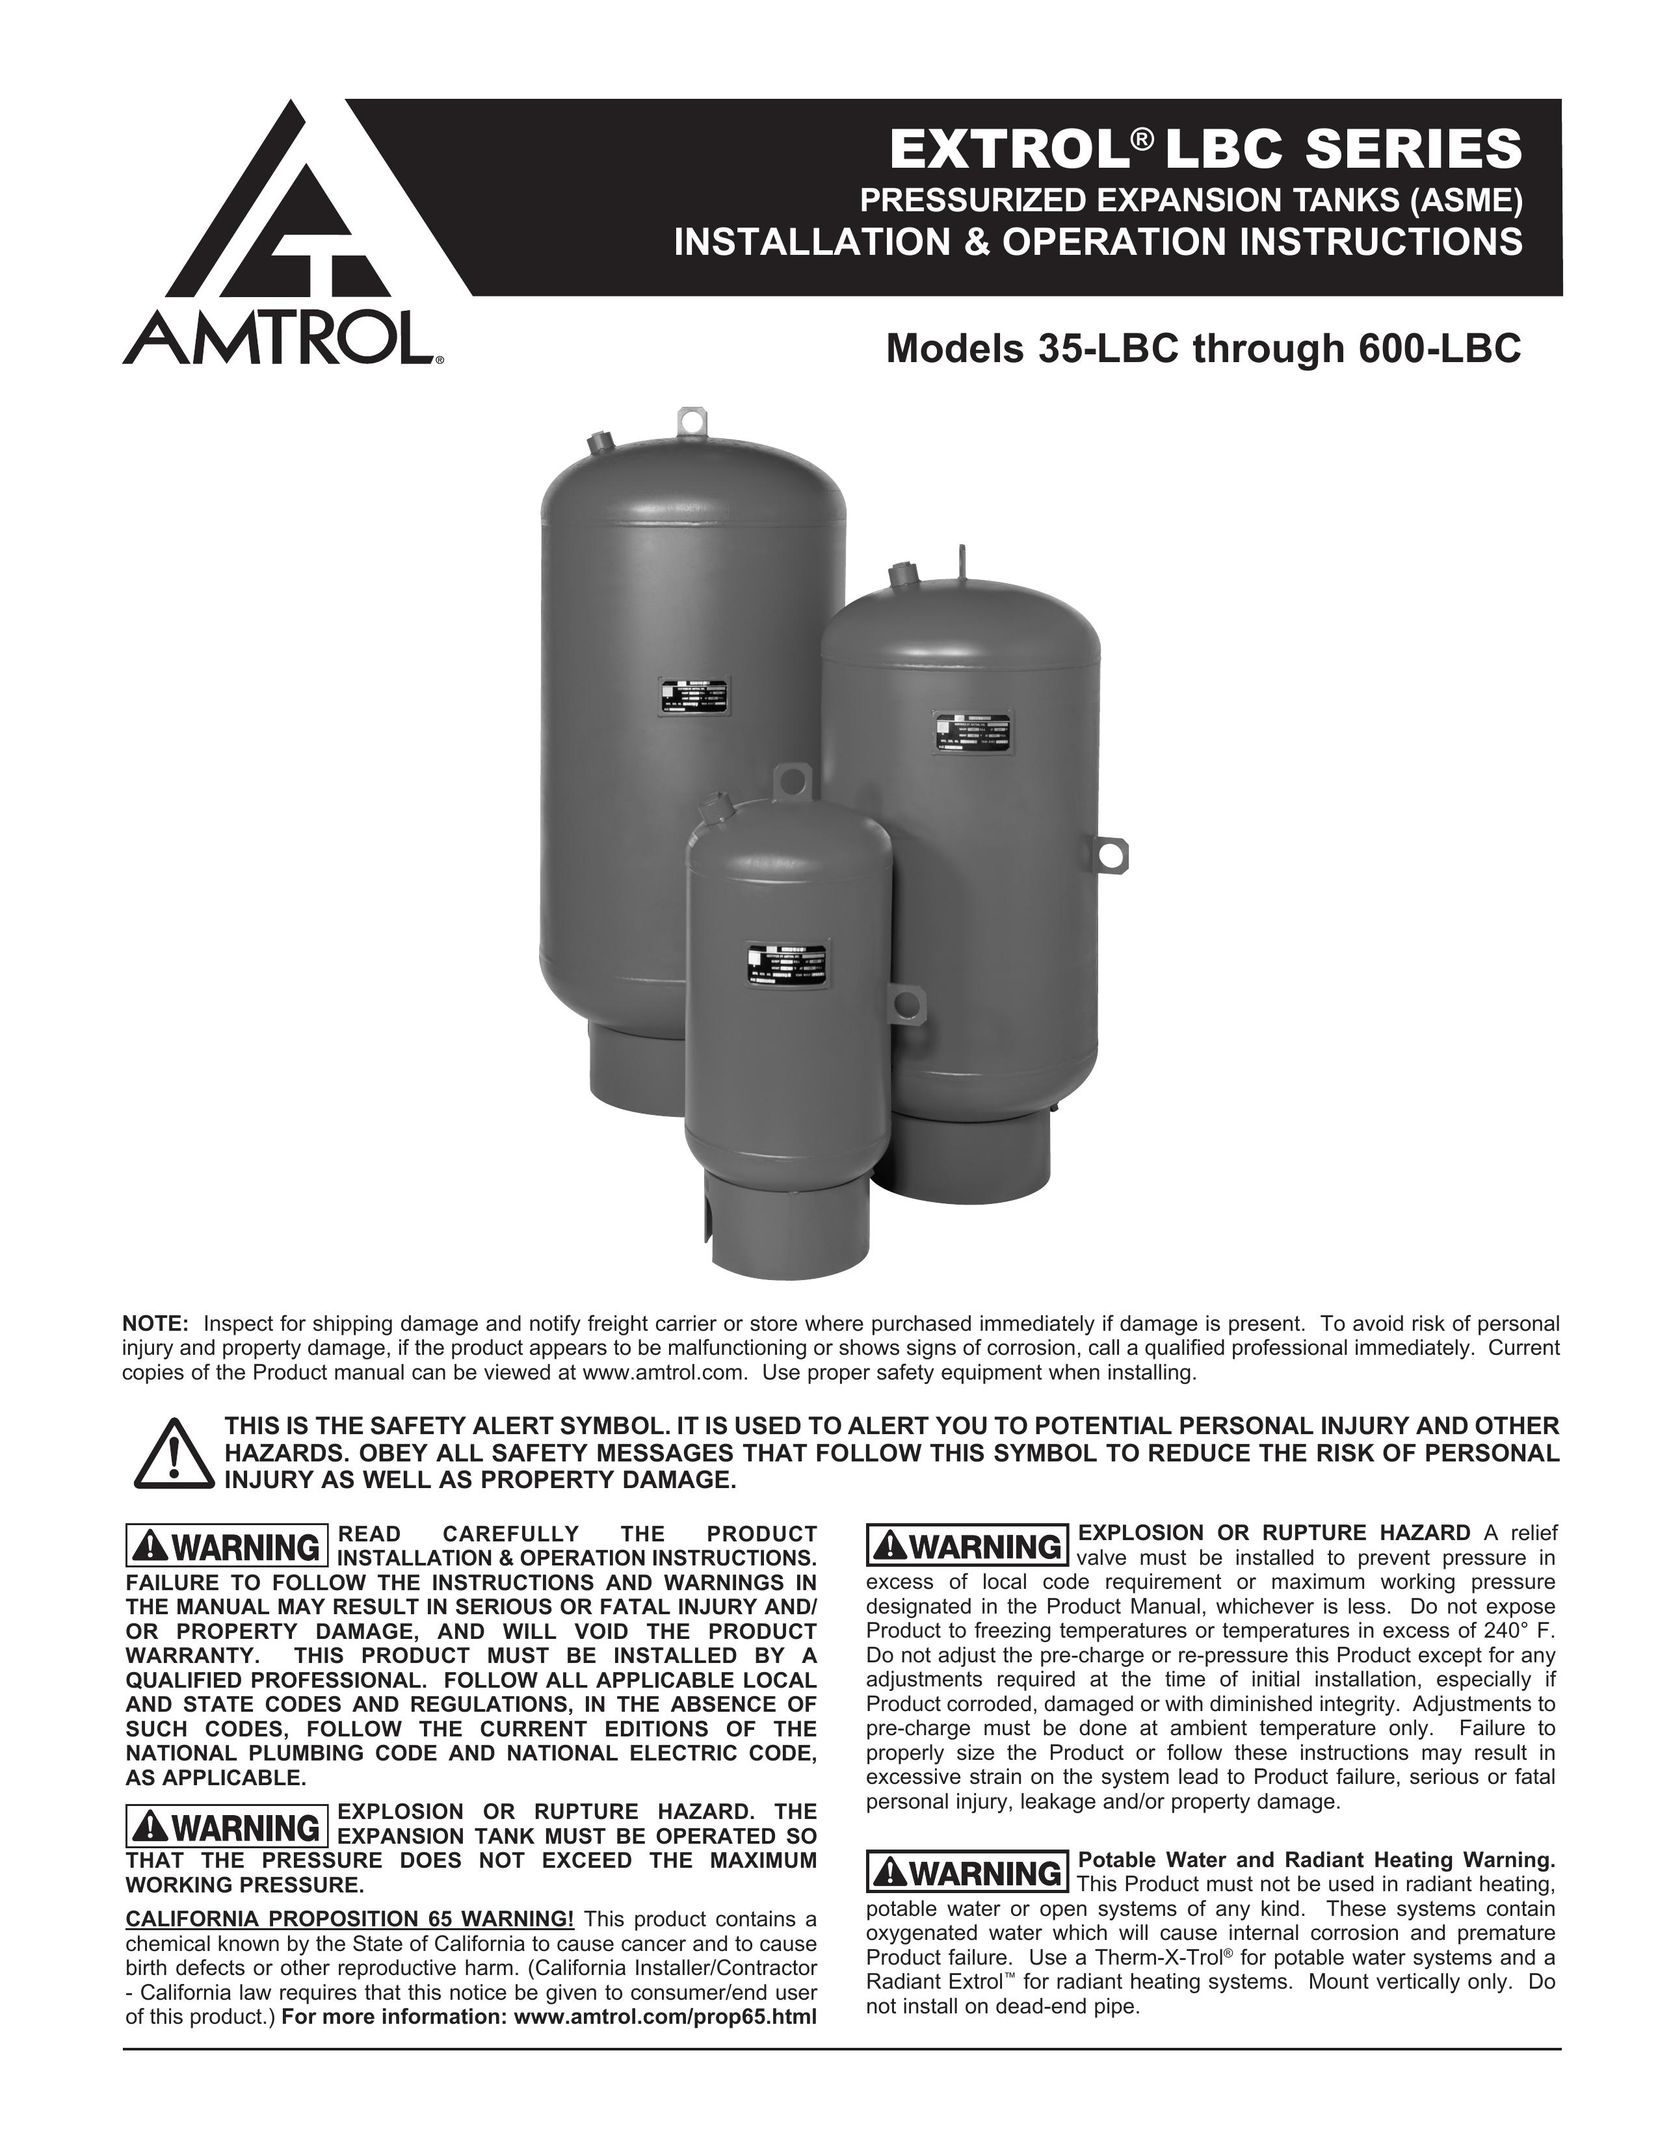 Amtrol 600-LBC Water Heater User Manual